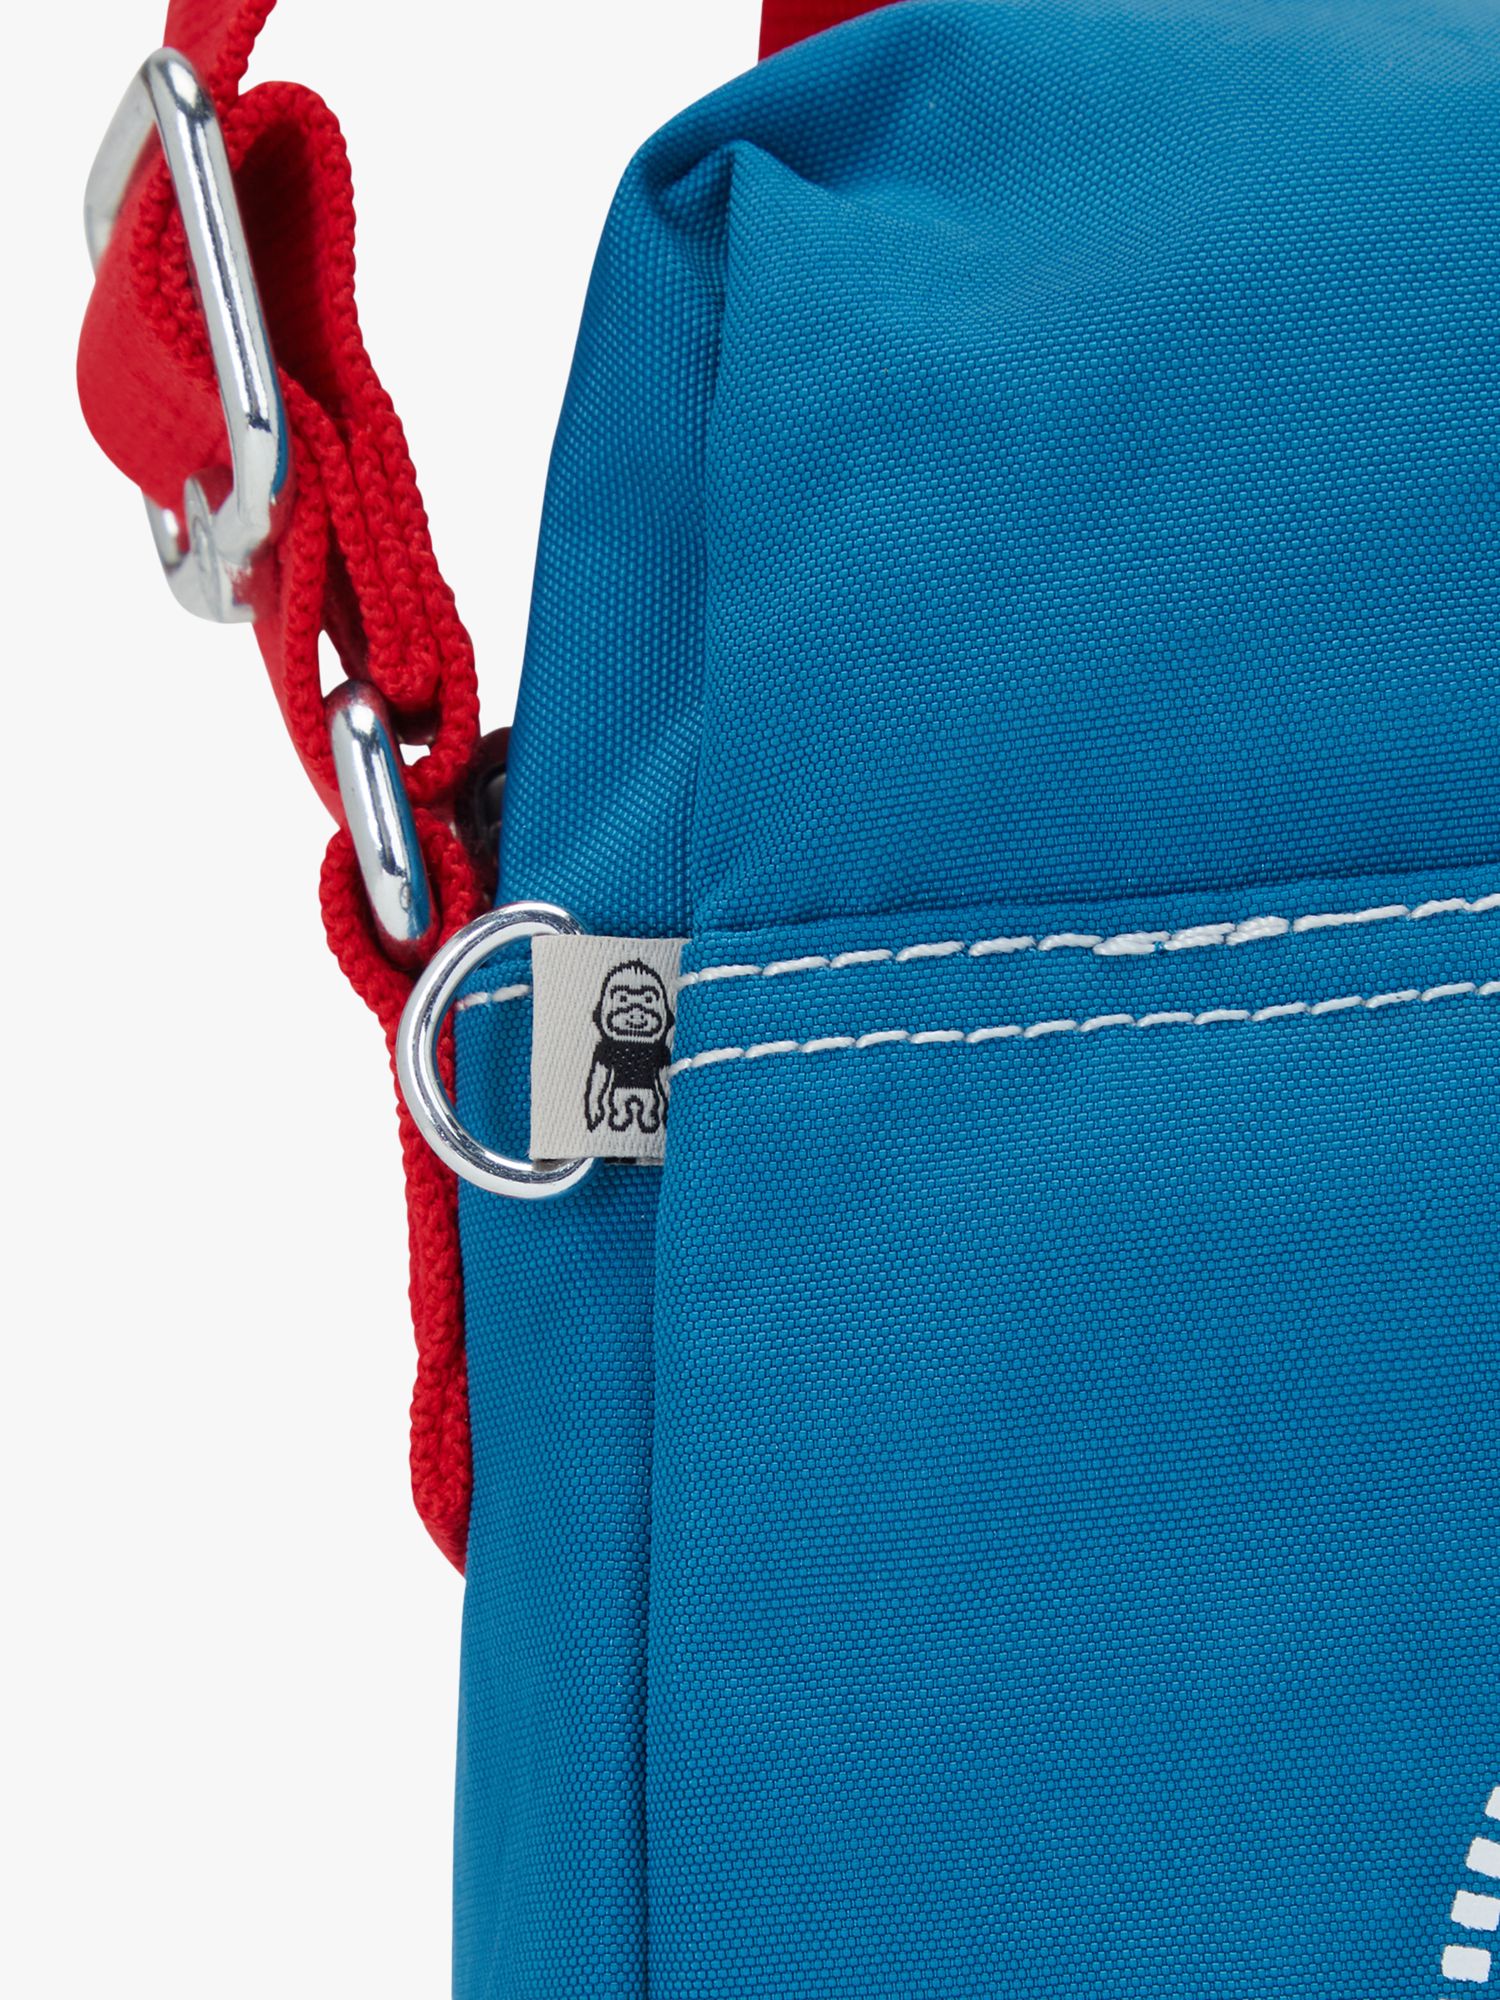 Kipling Chaz Ultimate Cross Body Bag, Blue/Red at John Lewis & Partners